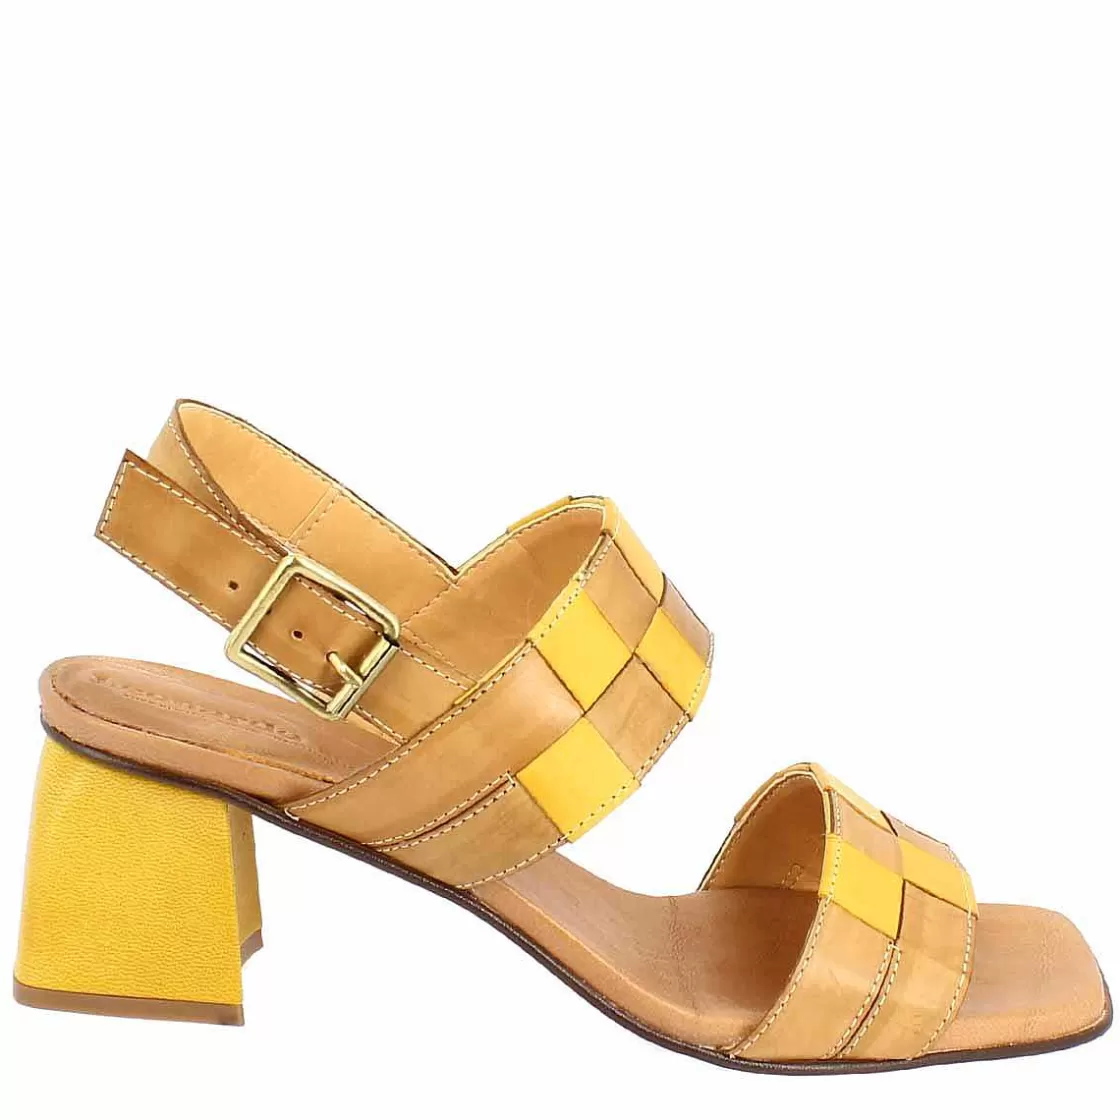 Leonardo Handmade Women'S Slingback Sandals In Brown And Yellow Leather. Sale